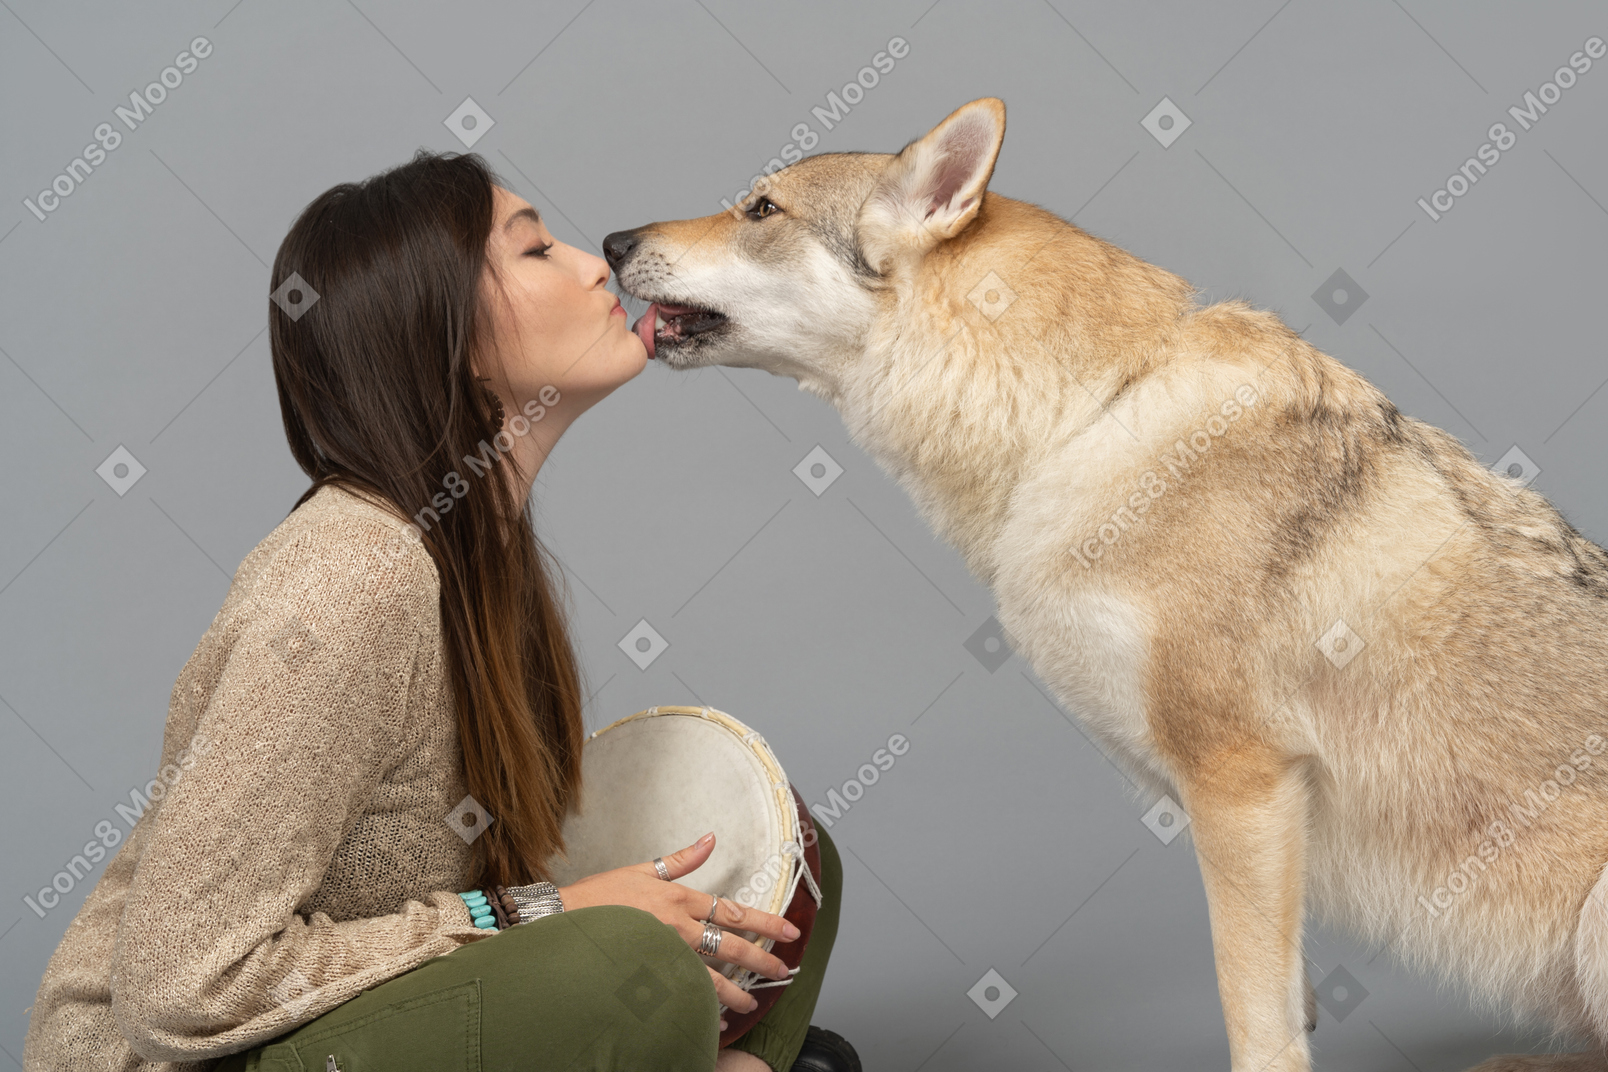 Beautiful purebred dog kissing a young woman